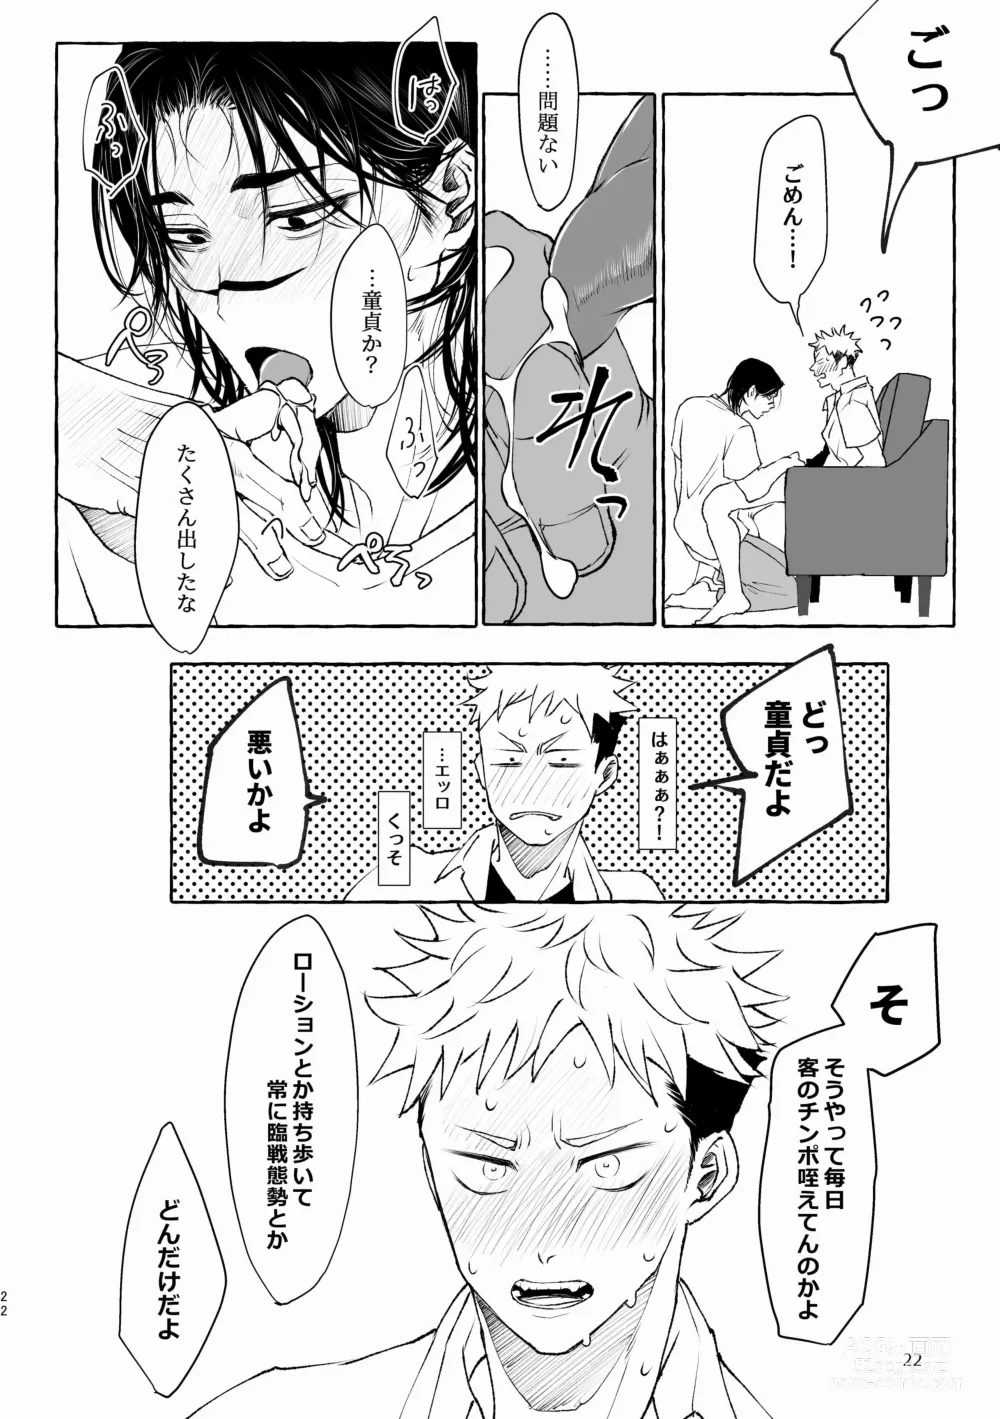 Page 22 of doujinshi Inryoku no Petrichor